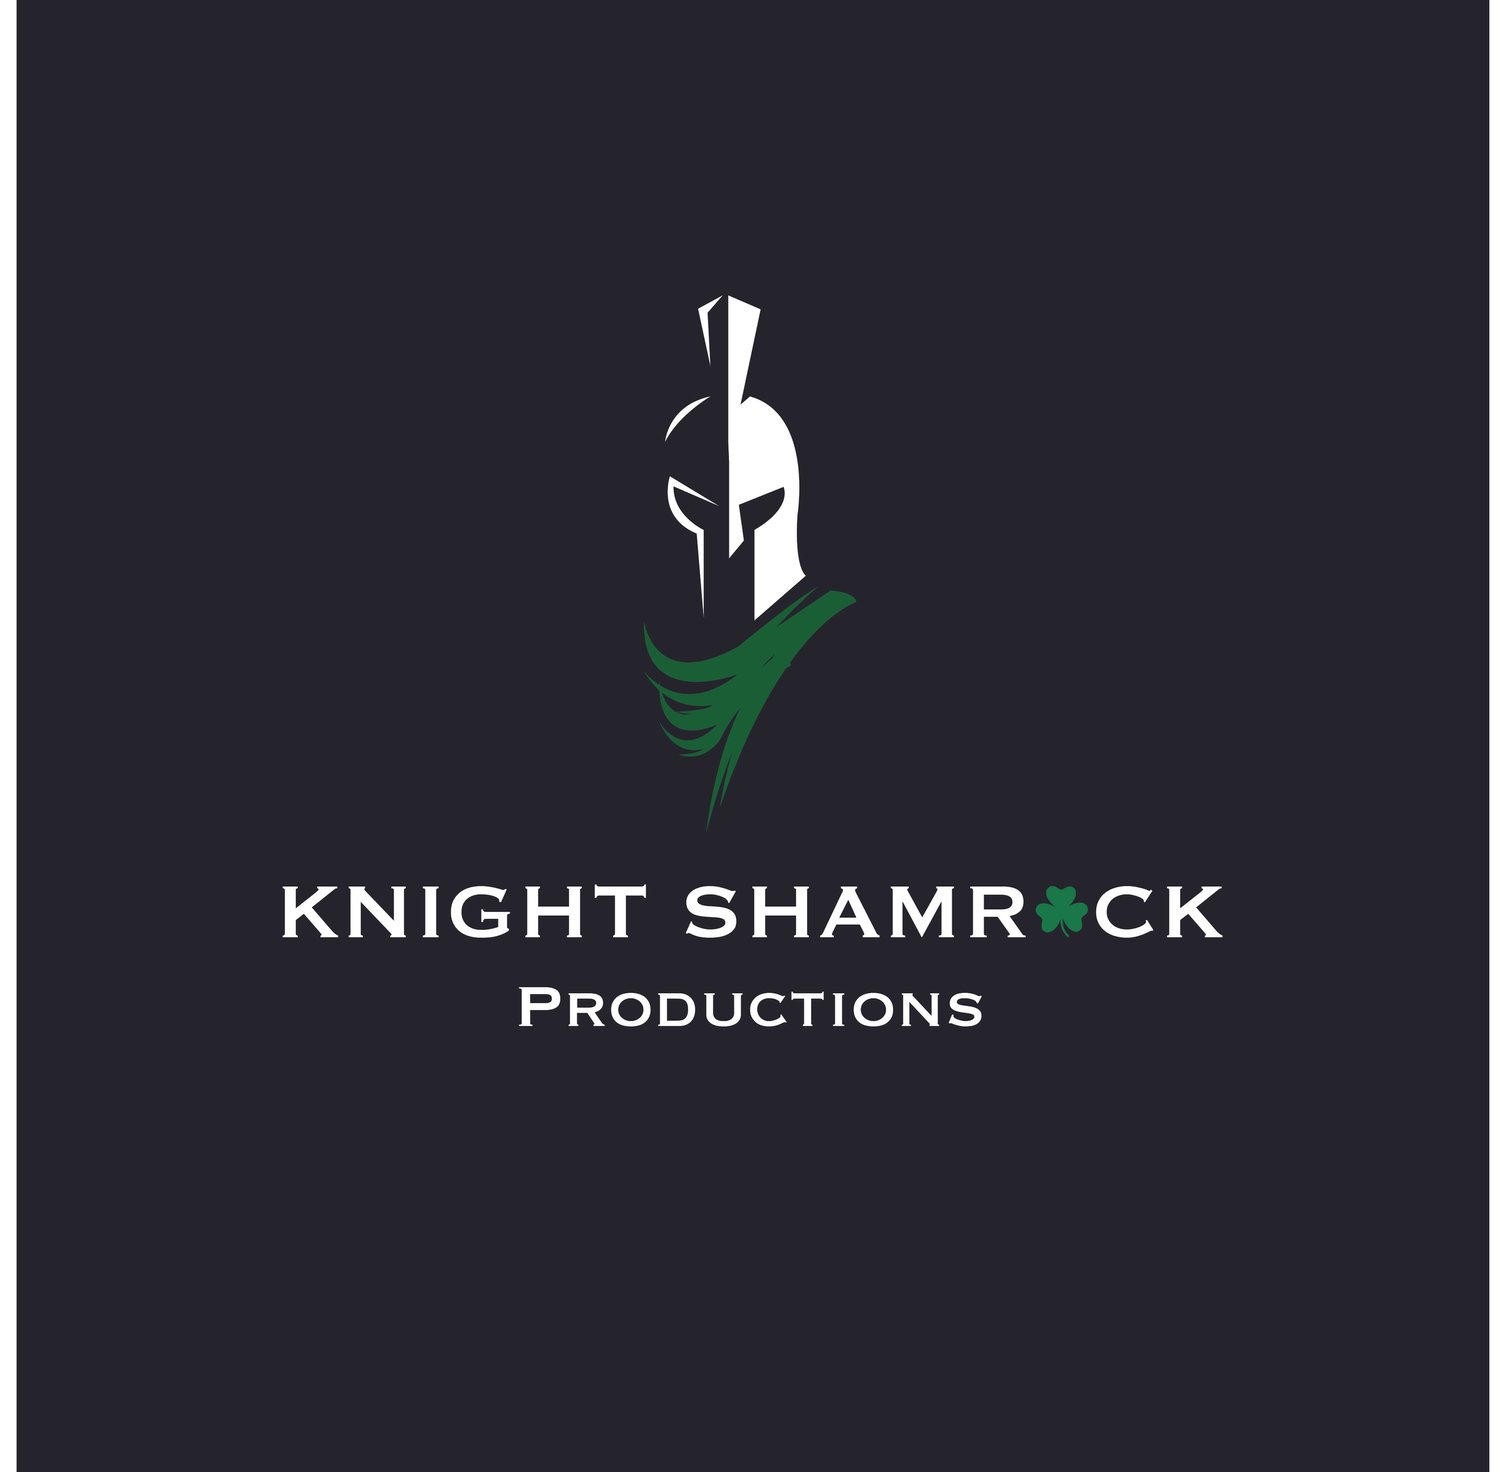 Knight Shamrock Productions